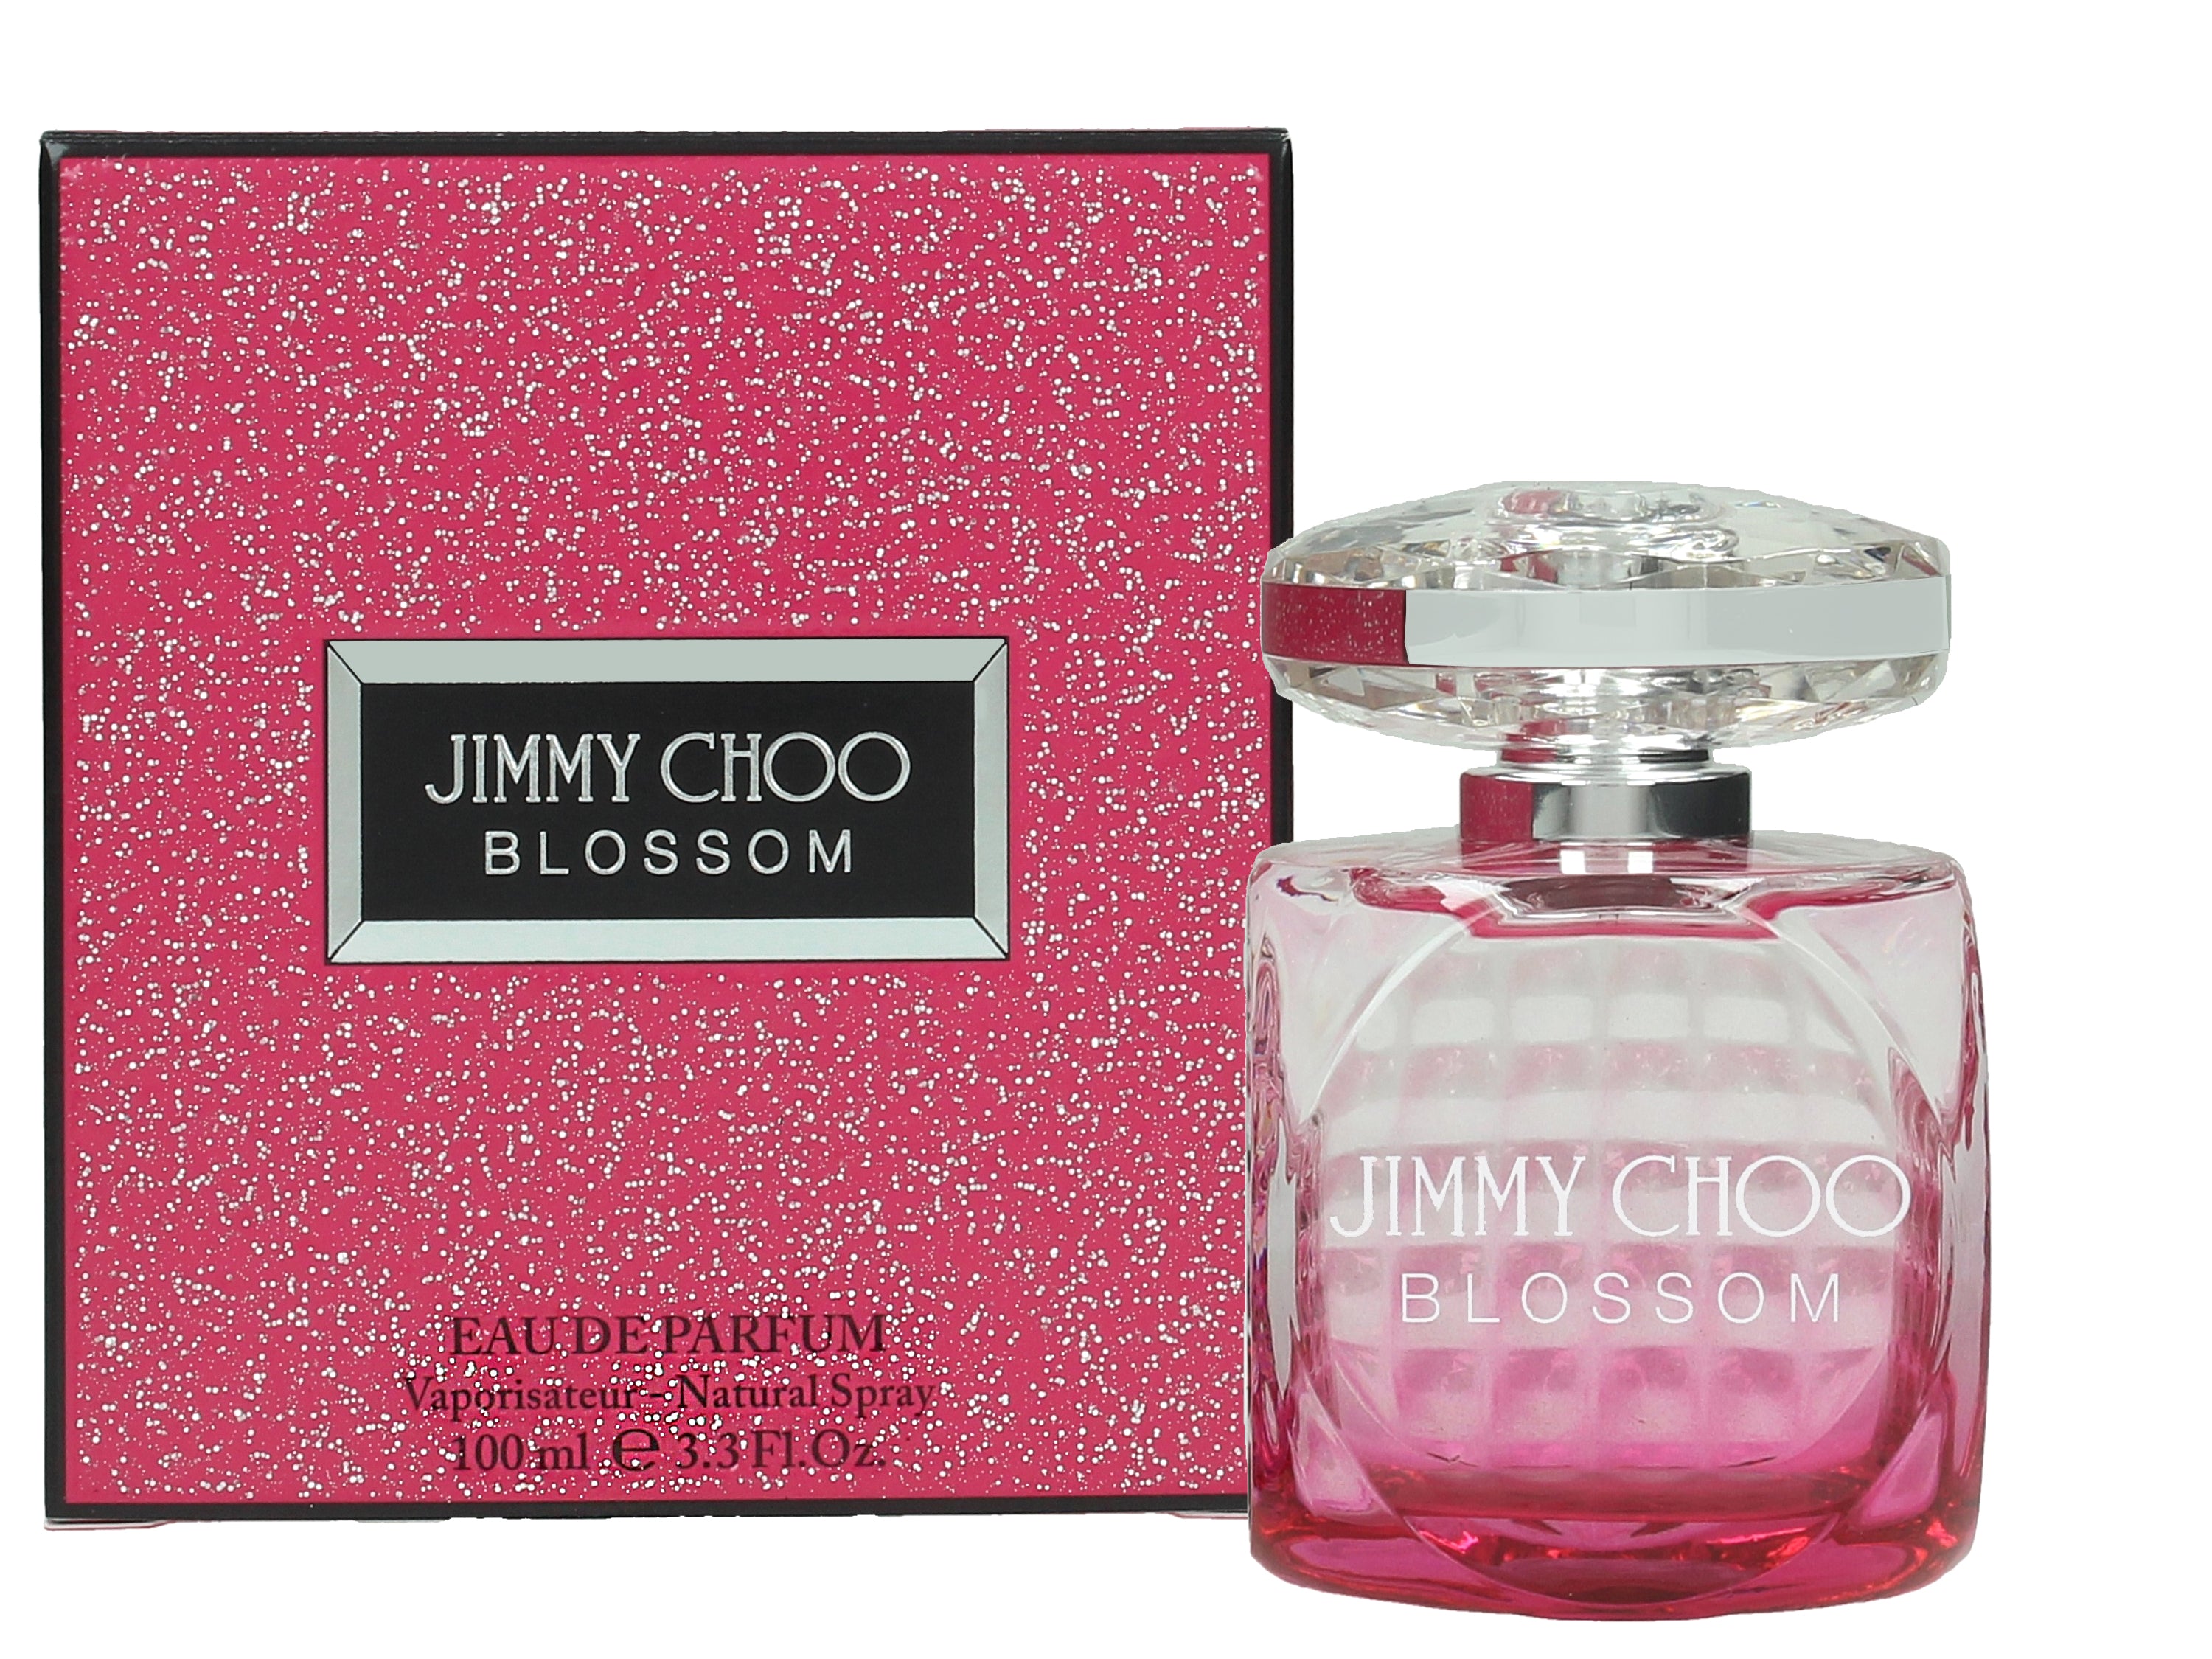 Jimmy Choo Blossom Eau de Parfum 100ml, 60ml, 40ml, & 4.5ml Spray - Peacock Bazaar